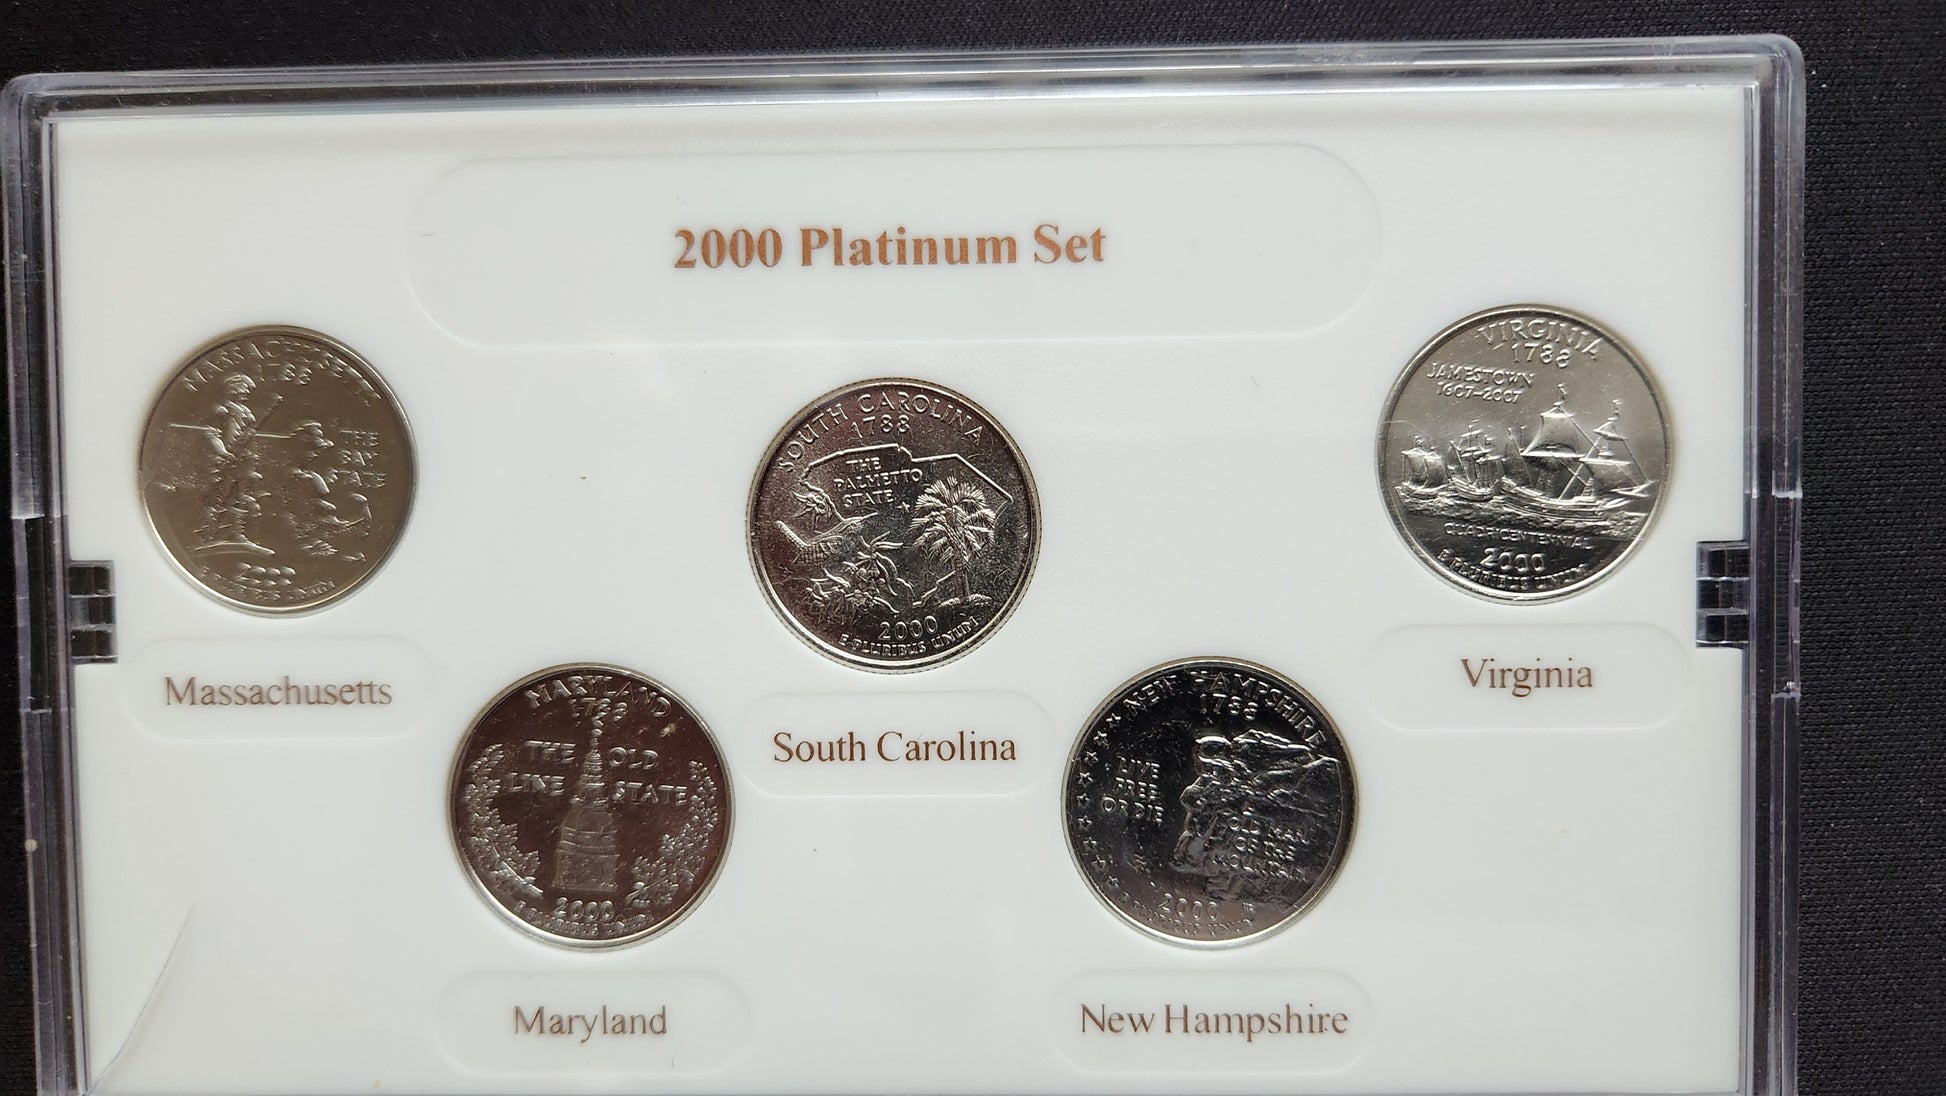 2000 Platinum Edition - State Quarter Collection